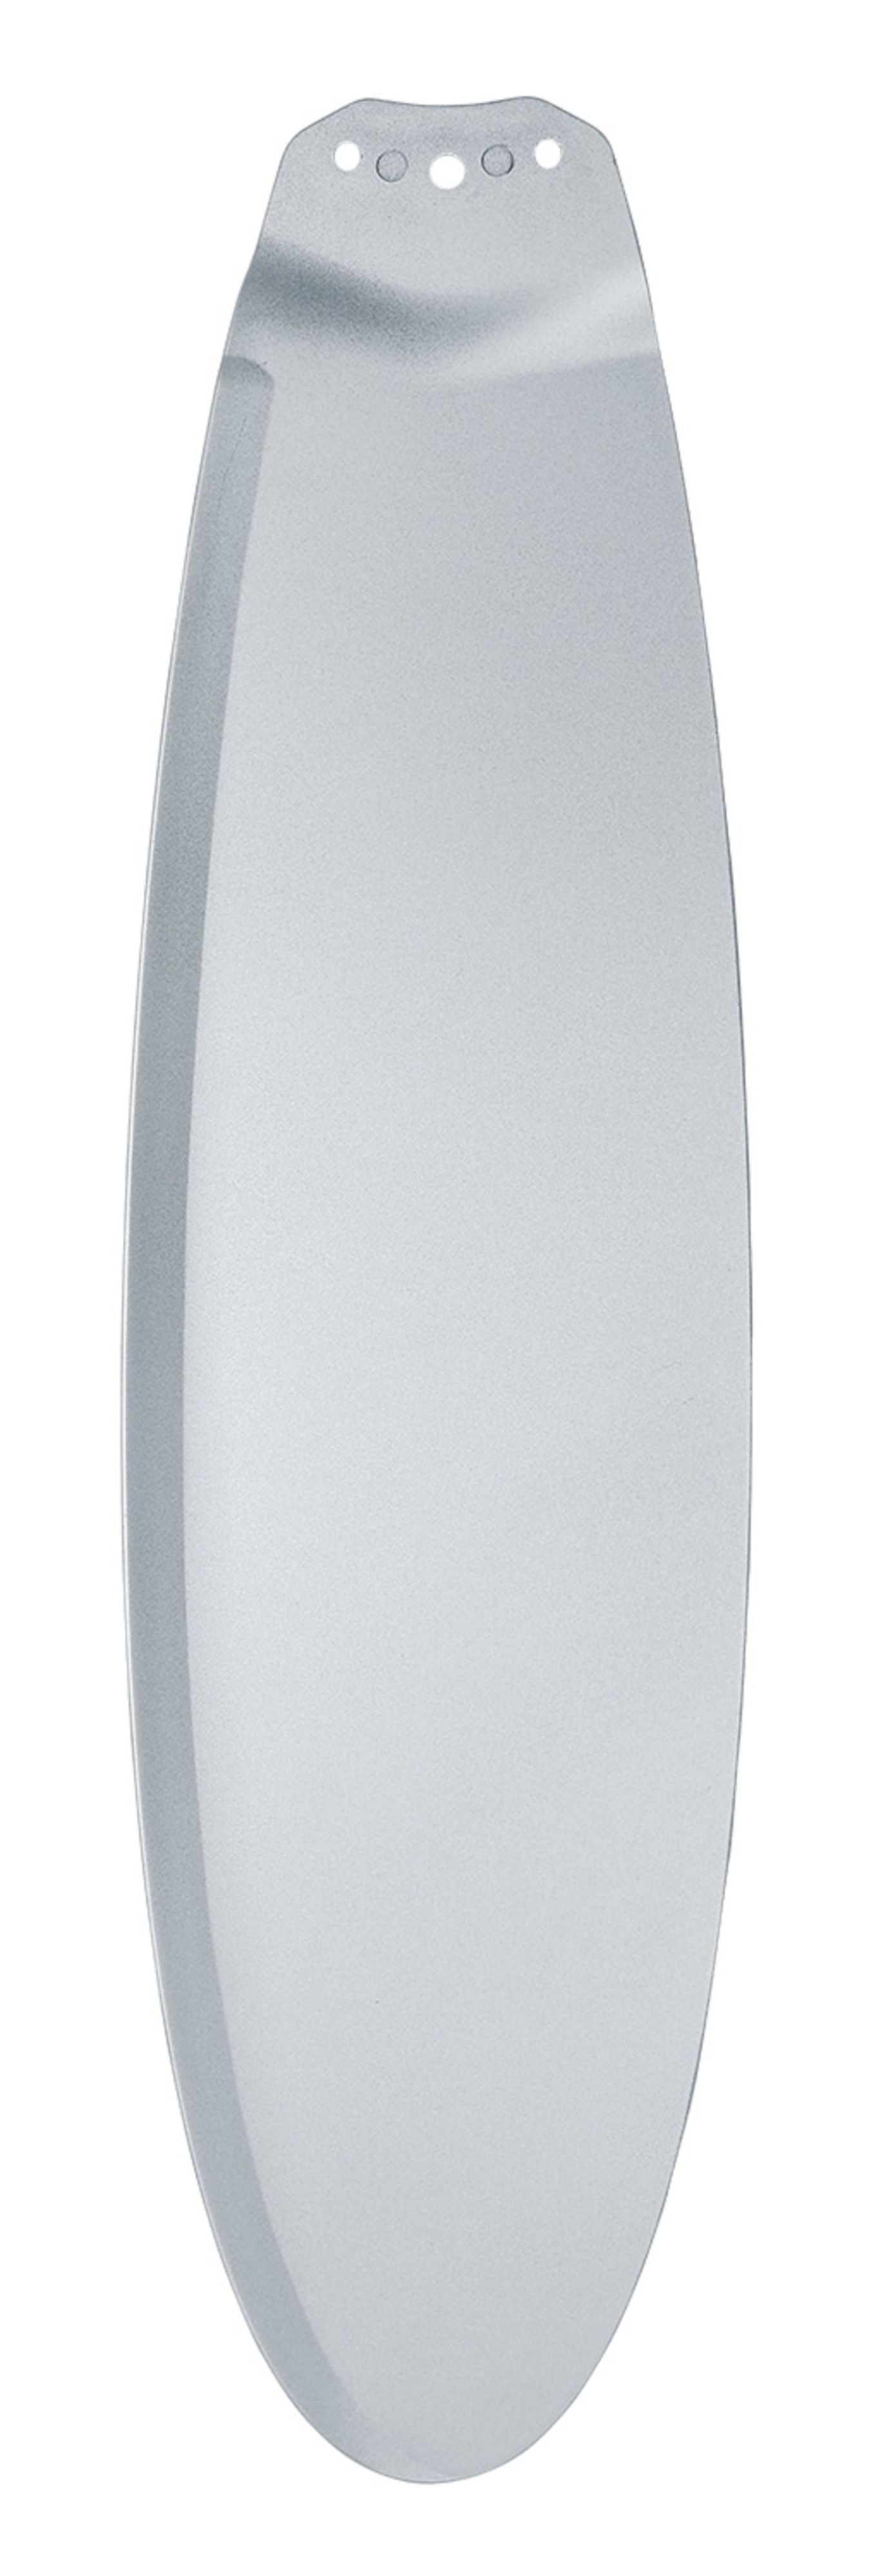 CASAFAN Eco Plano Silber LED Grau / (28 Watt) II Deckenventilator